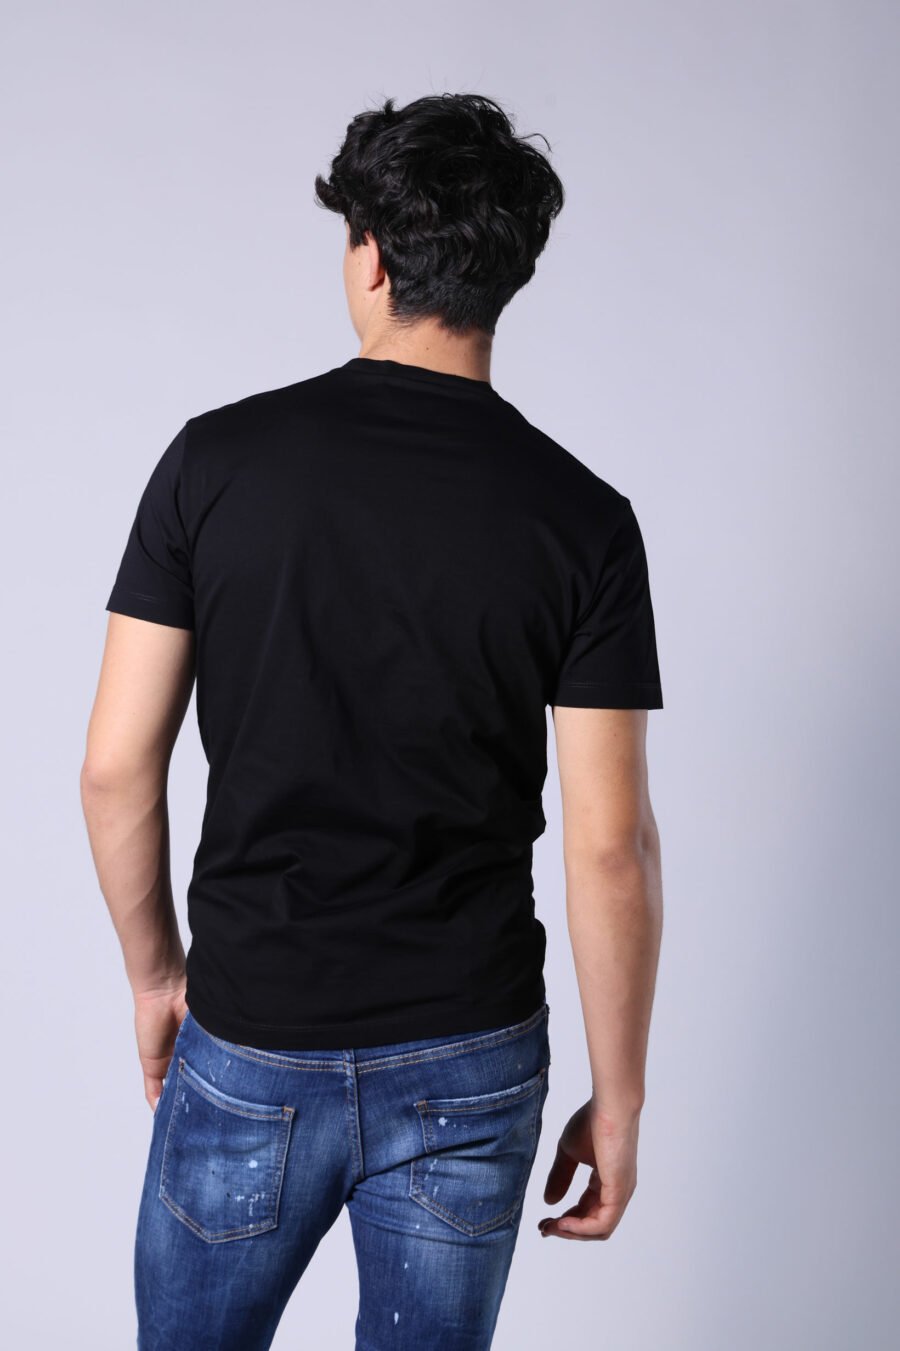 Camiseta negra con logo clasico en blanco - Untitled Catalog 05263